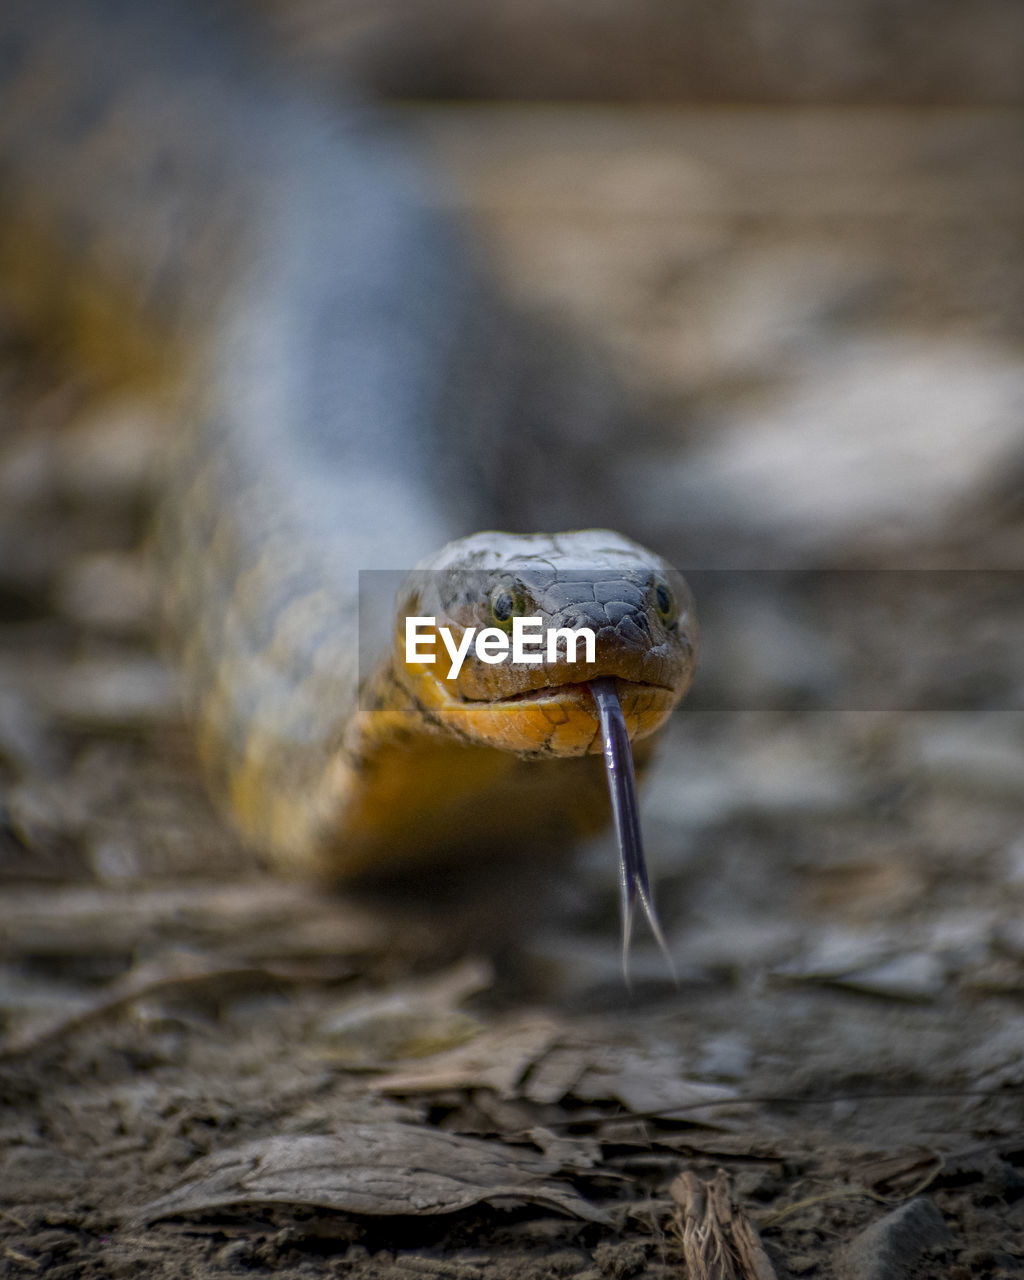 Close-up portrait of a snake